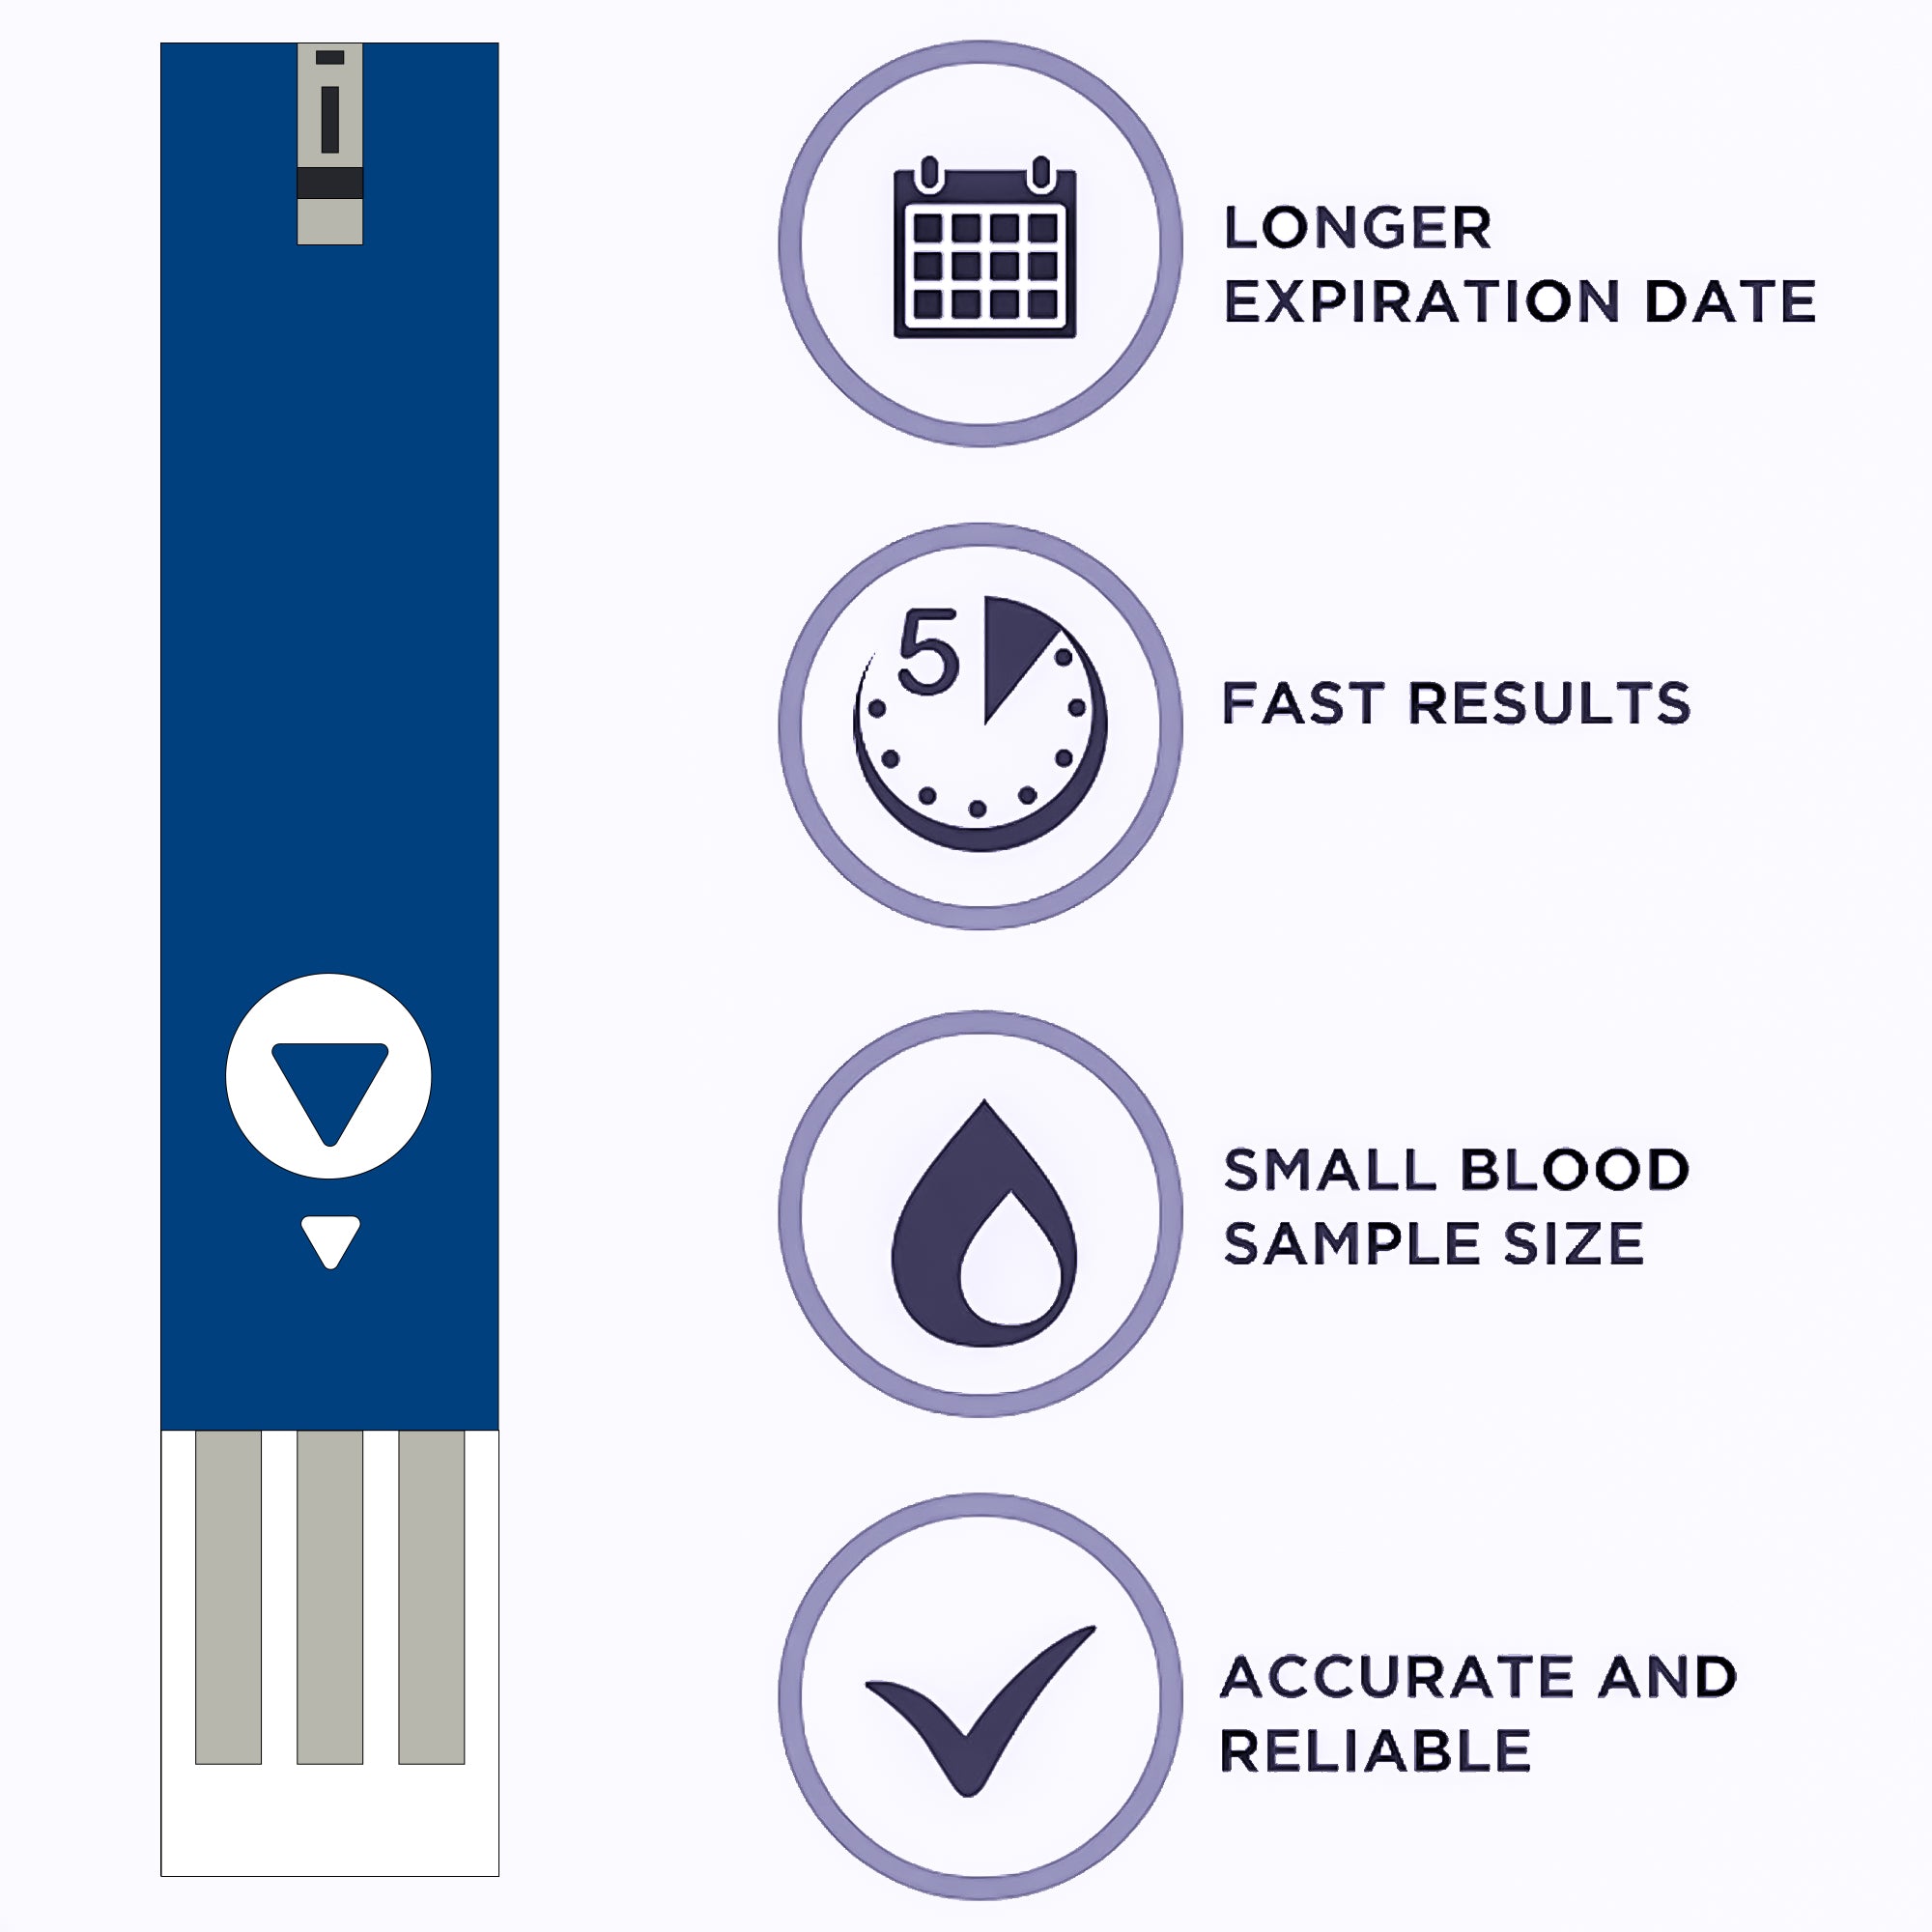 K-life Element Blood Glucose Sugar Testing 50 Strips